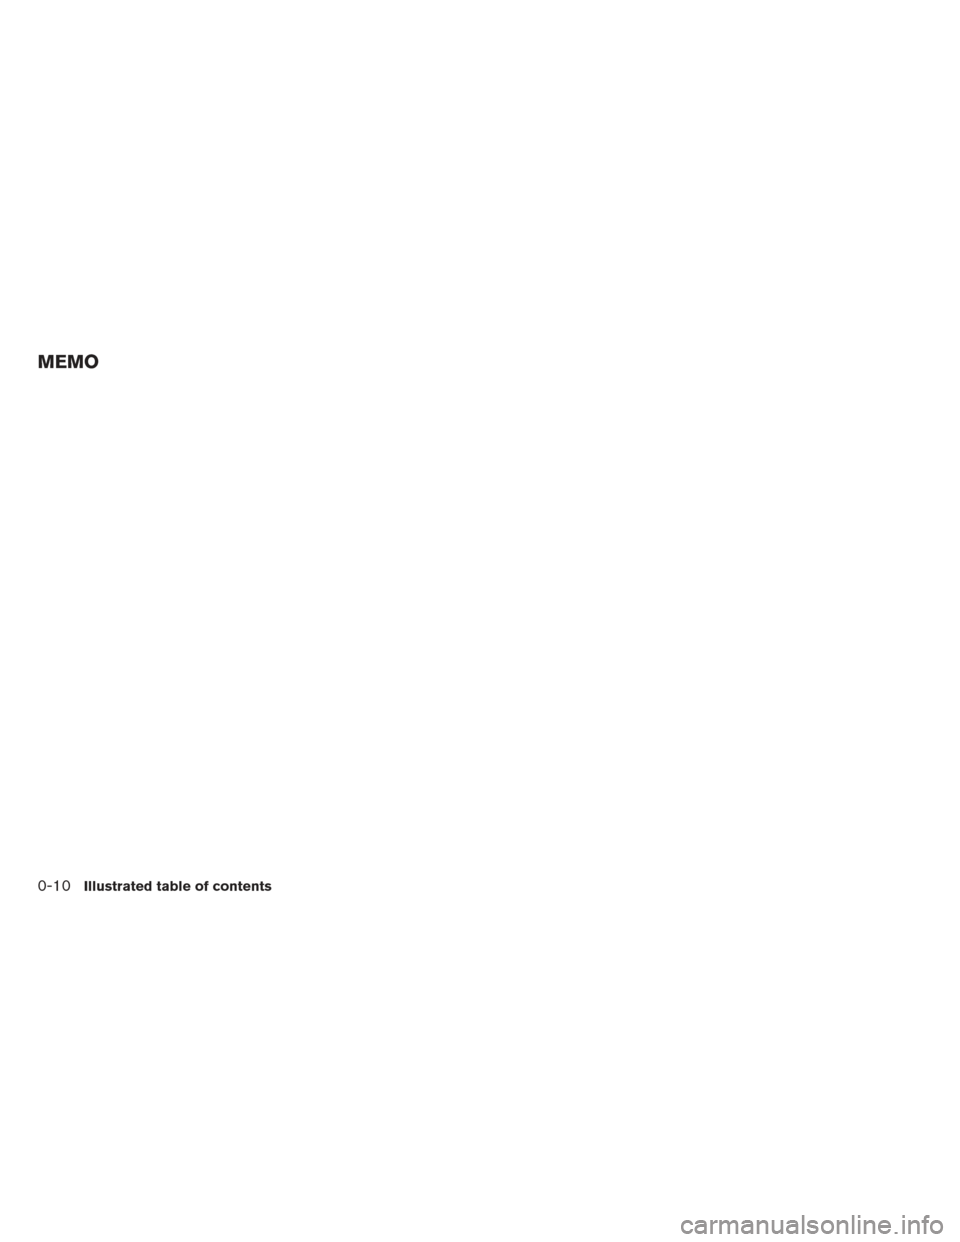 NISSAN VERSA SEDAN 2013 2.G User Guide MEMO
0-10Illustrated table of contents 